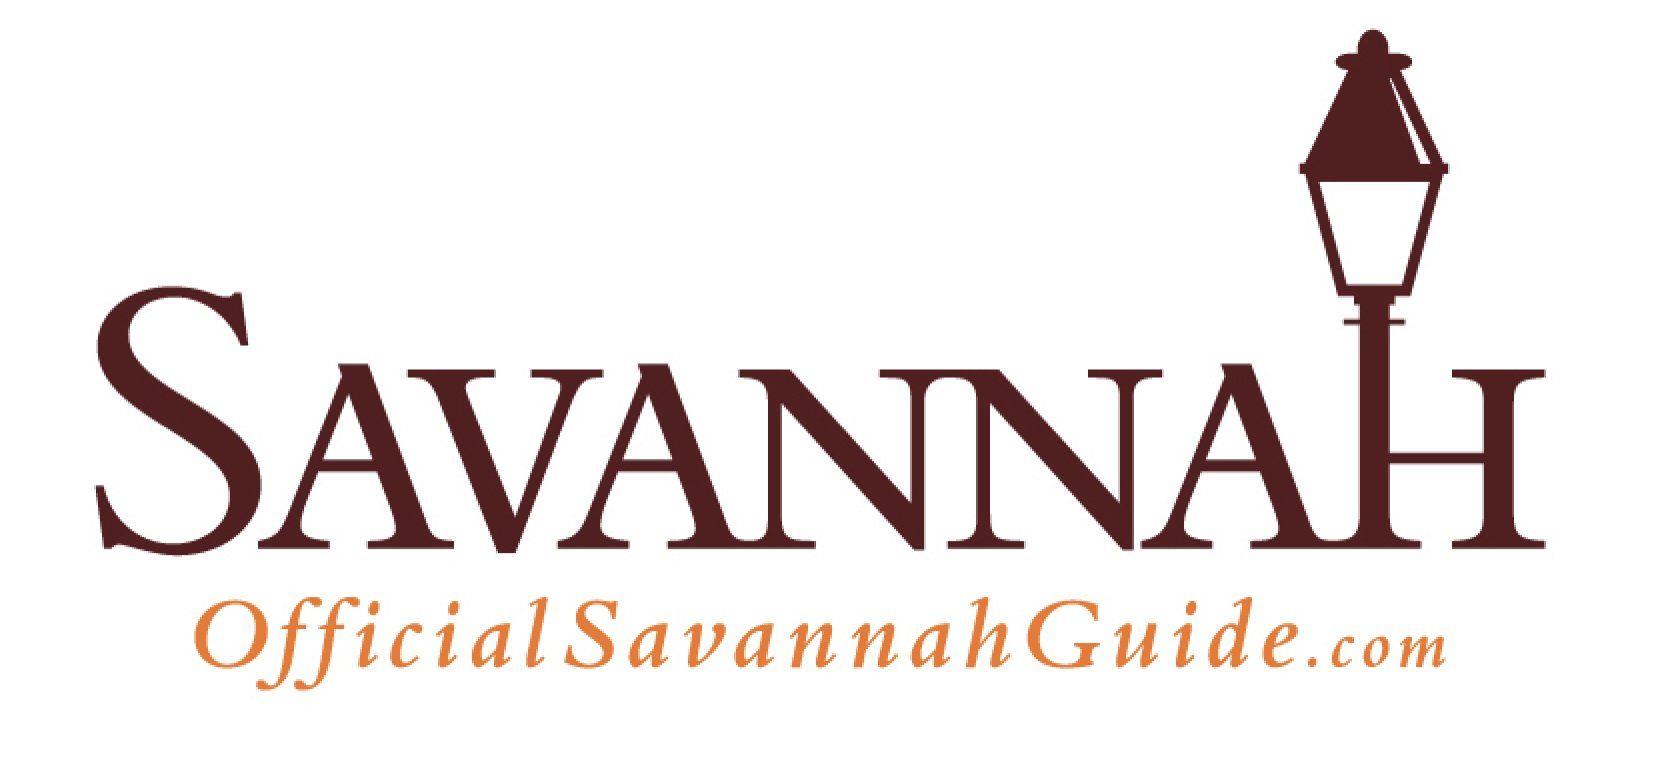 visit savannah in march